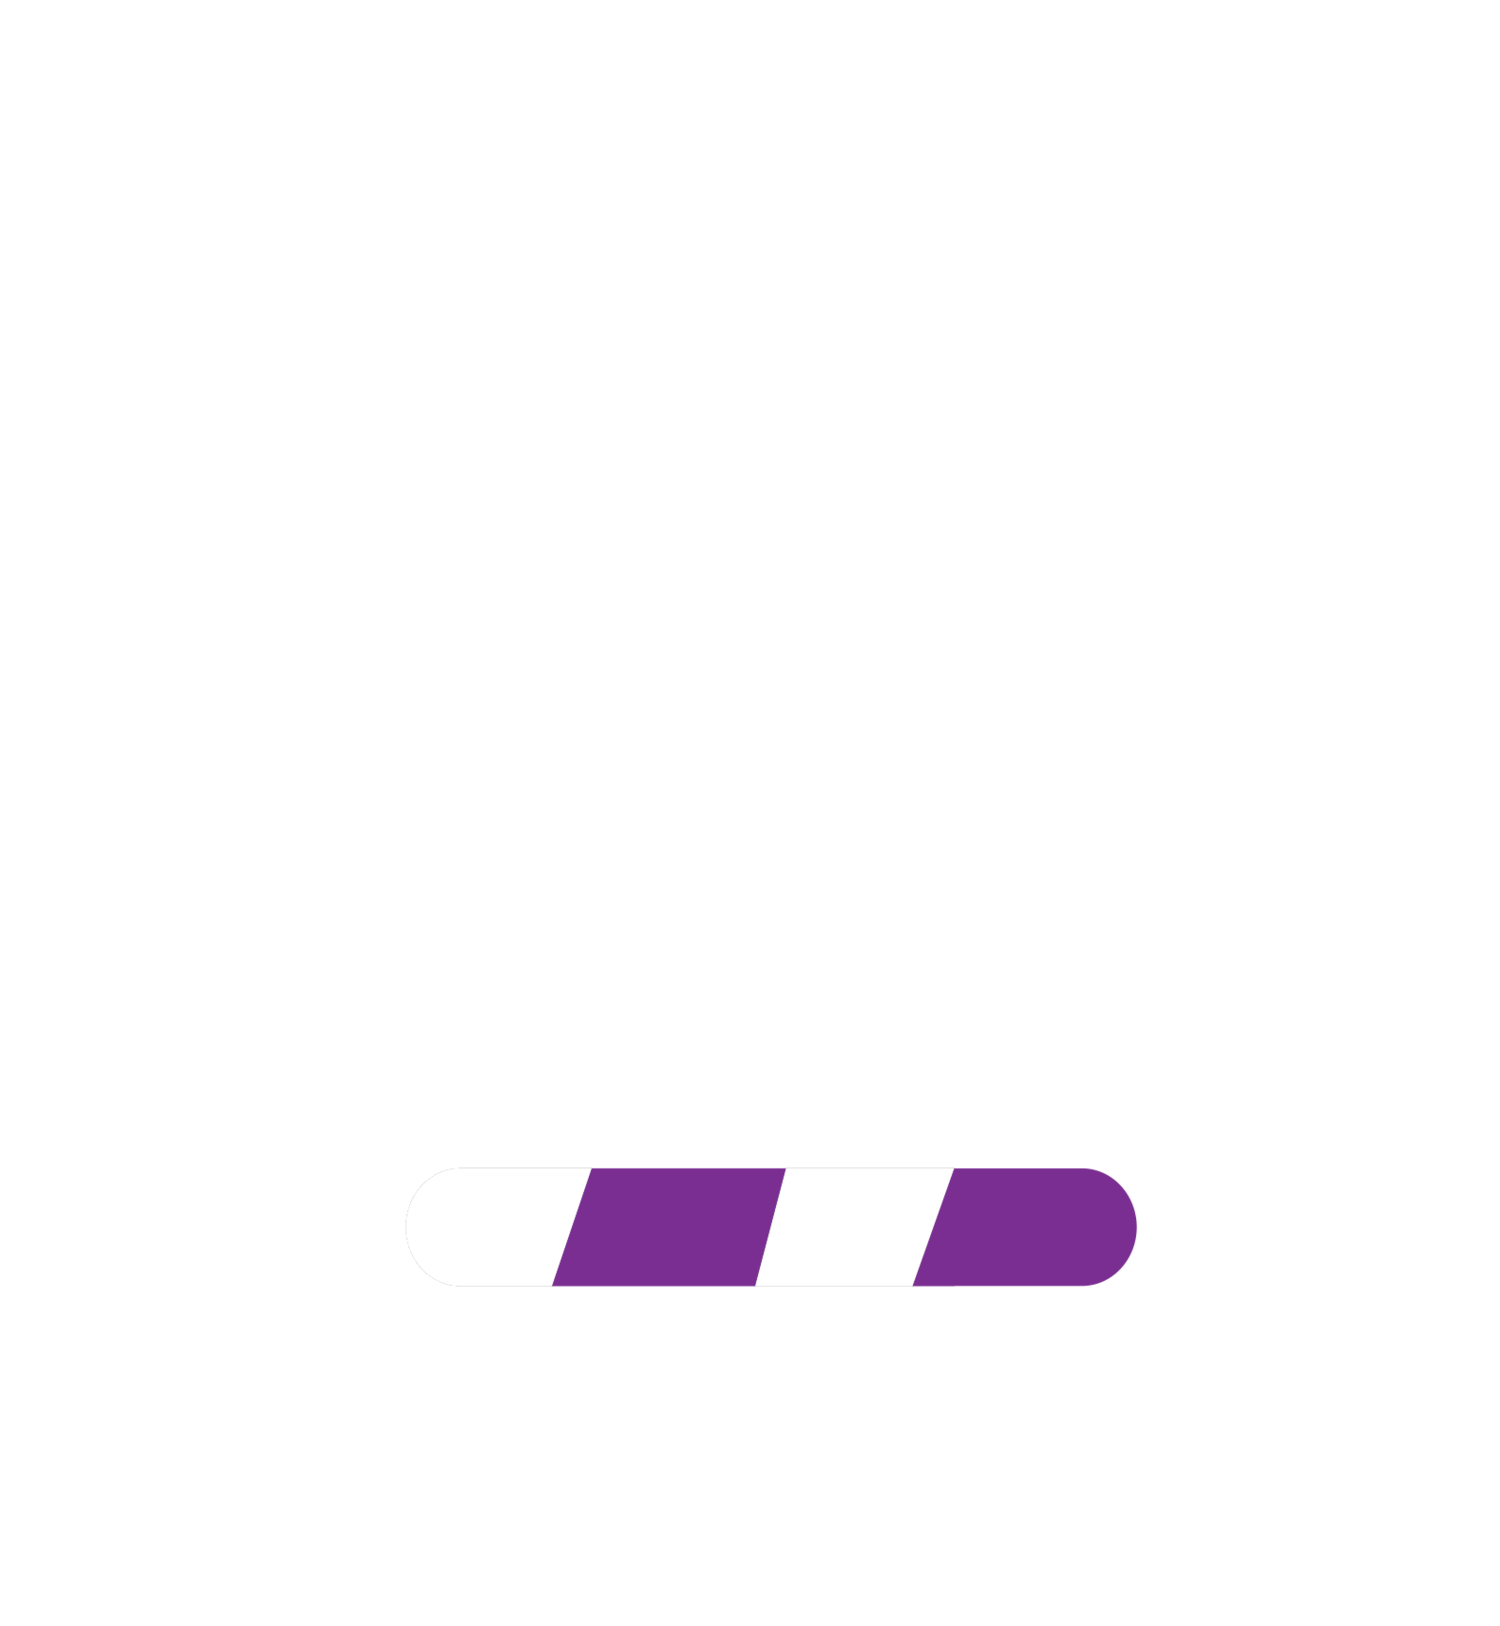 Southgate Cricket Club